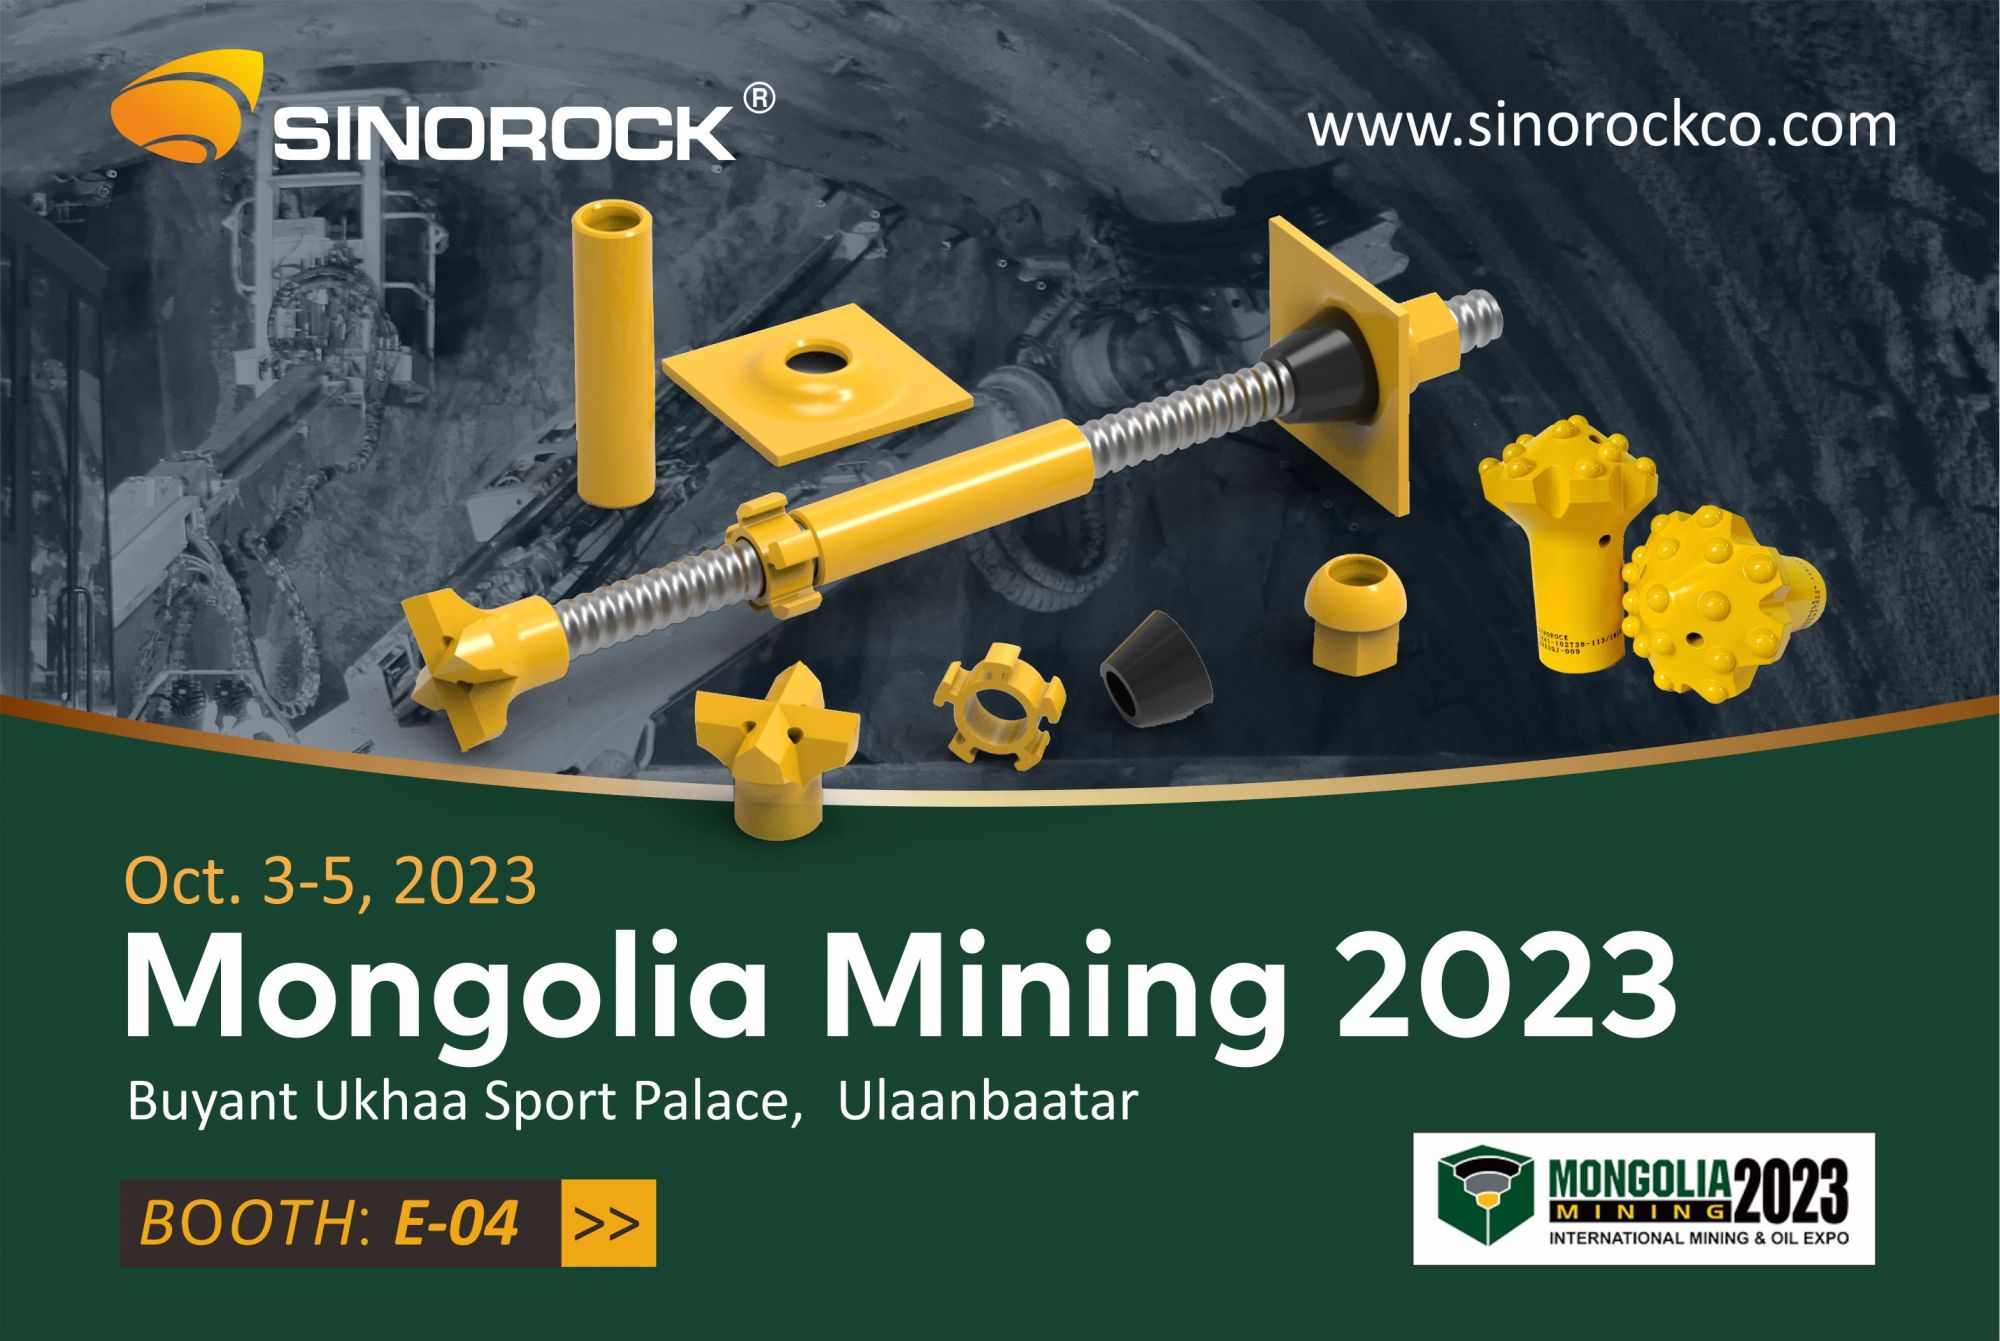 Mongolia Mining 2023 International Mining & Oil Expo